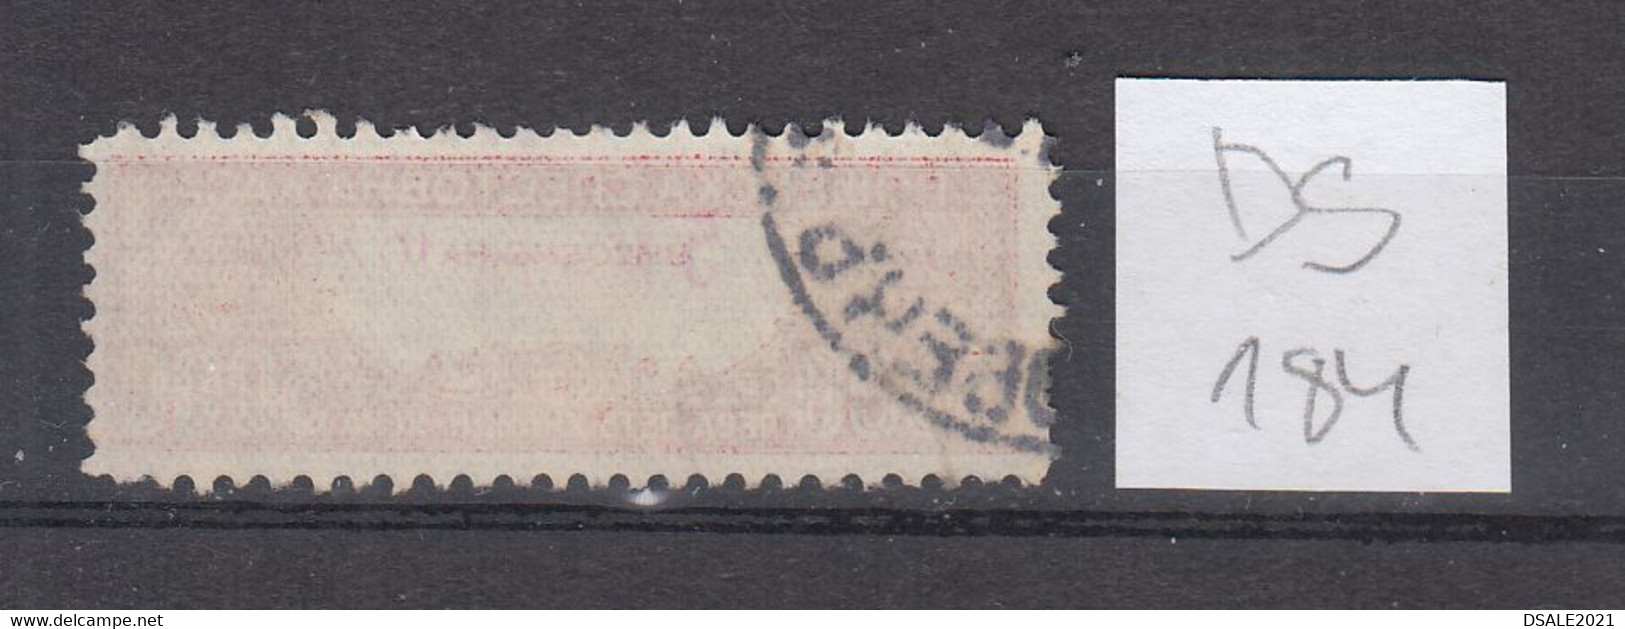 Bulgaria Bulgarie Bulgarije 1930s/40s Postal Savings Bank Contribution Fee 5000Lv. Fiscal Revenue Stamp (ds184) - Timbres De Service